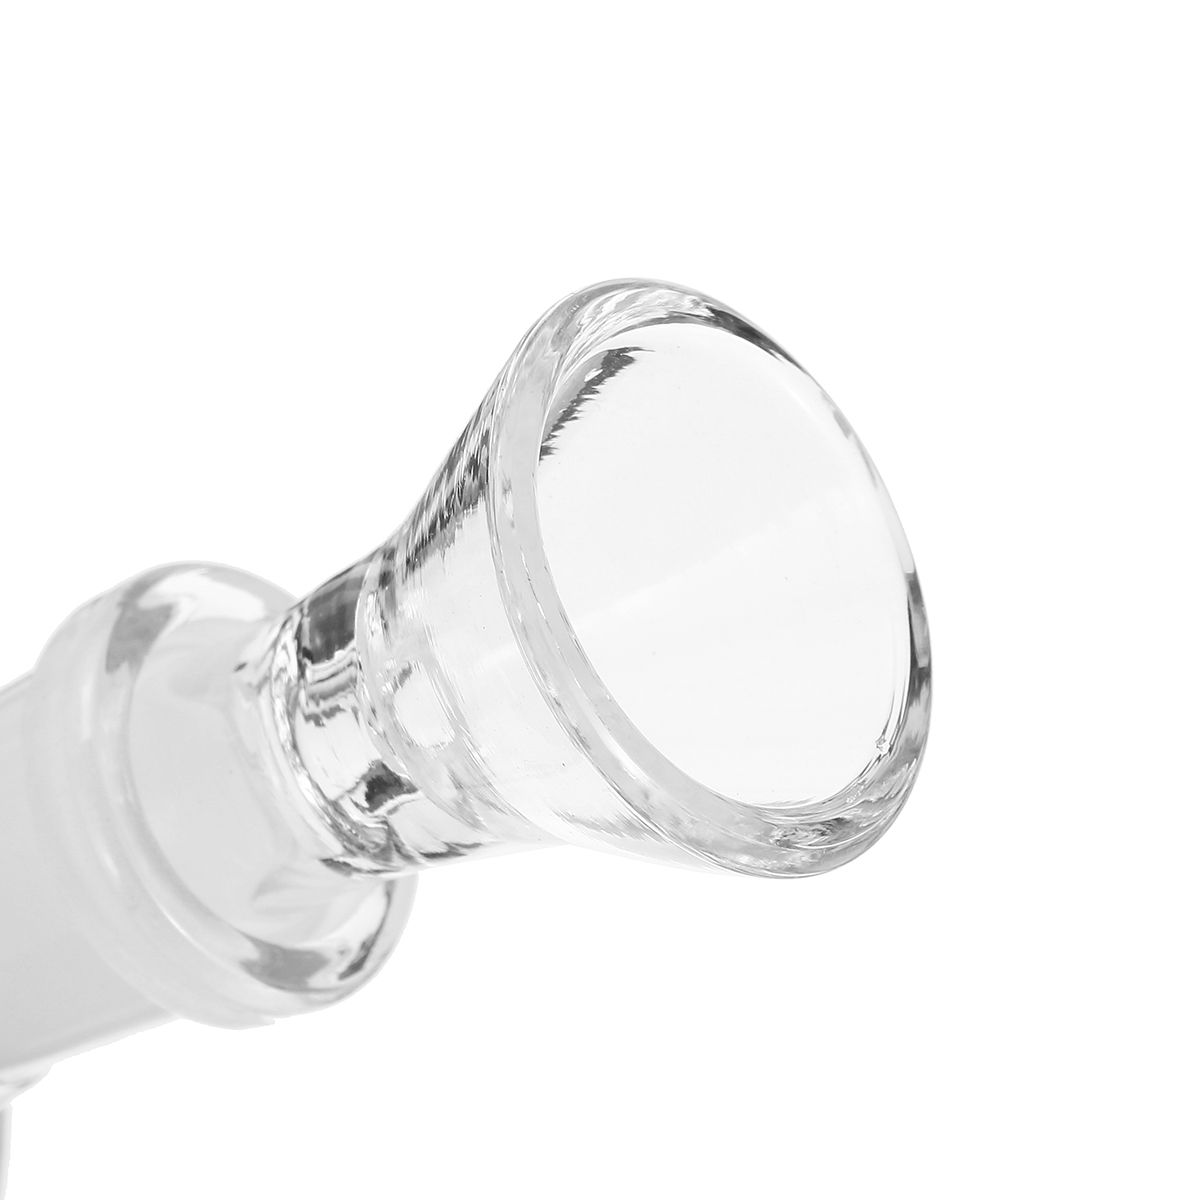 Transparent-Luminous-Water-Glass-Smoke-Pipes-Bottle-Glassware-Filter-Tube-1587692